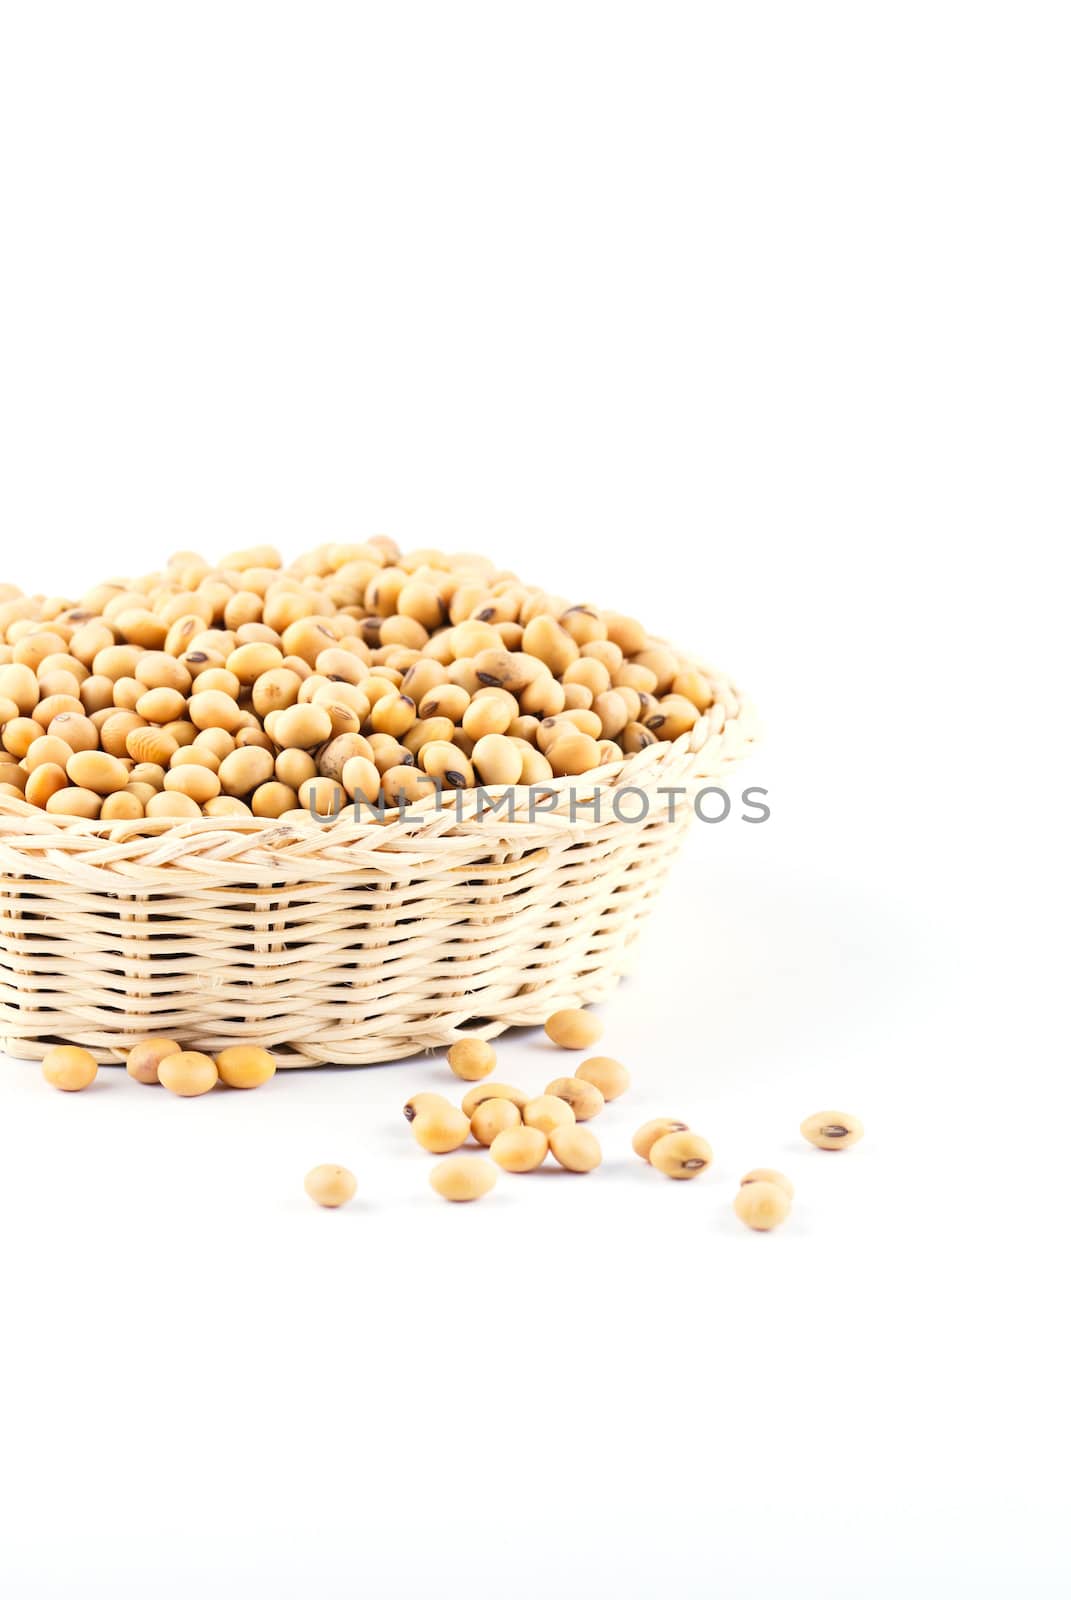 soybean by teen00000